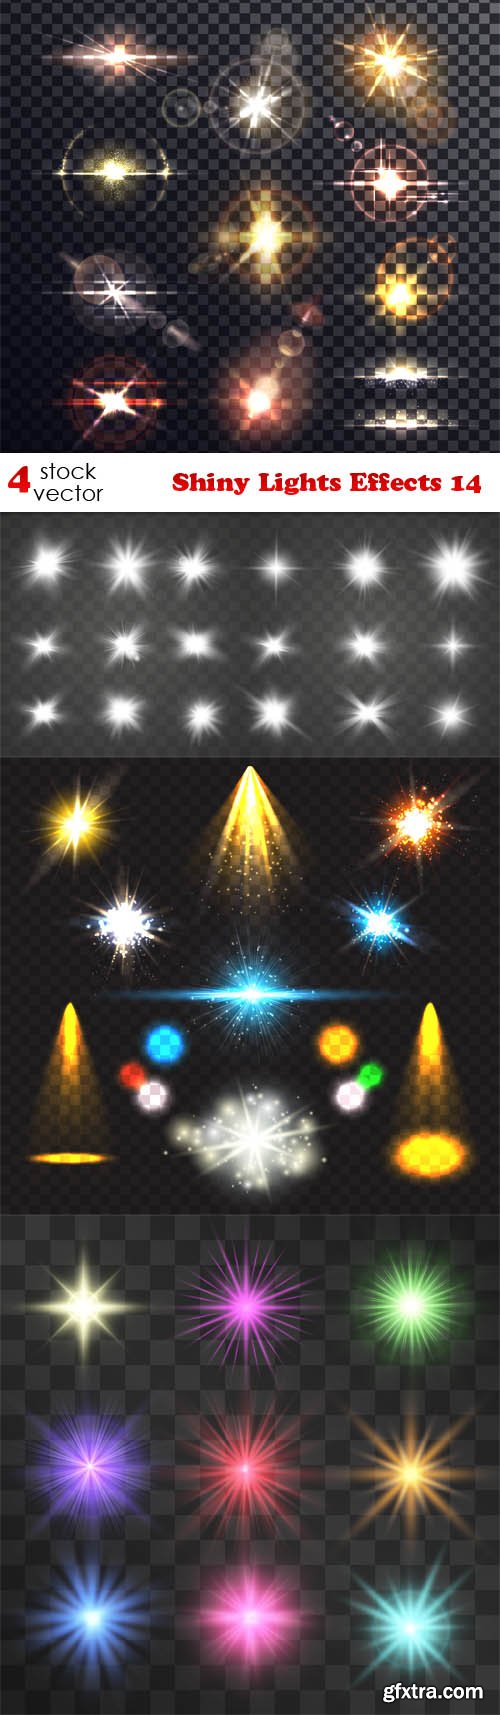 Vectors - Shiny Lights Effects 14